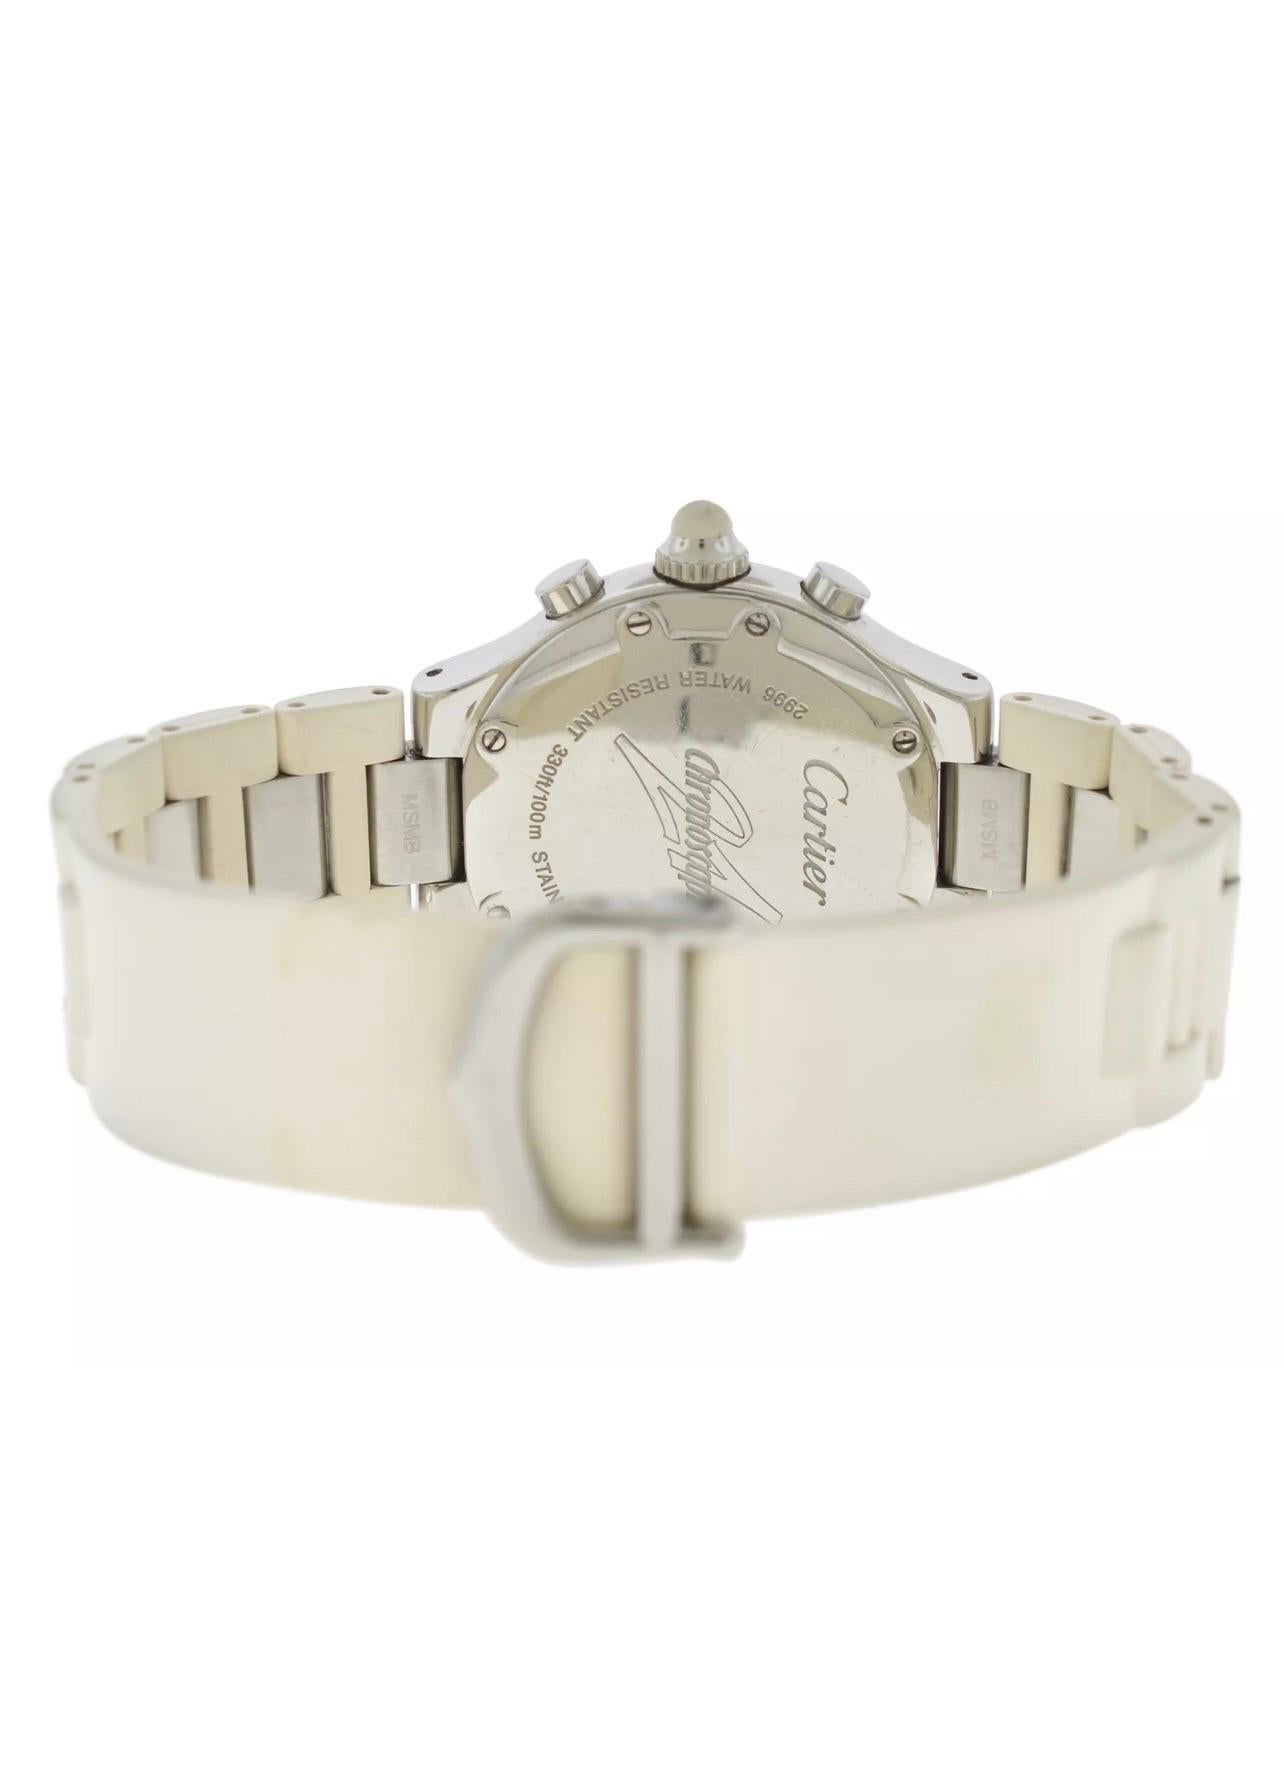 Cartier Chronoscaph Cream Women's Rubber Strap Watch, 2996 For Sale 2